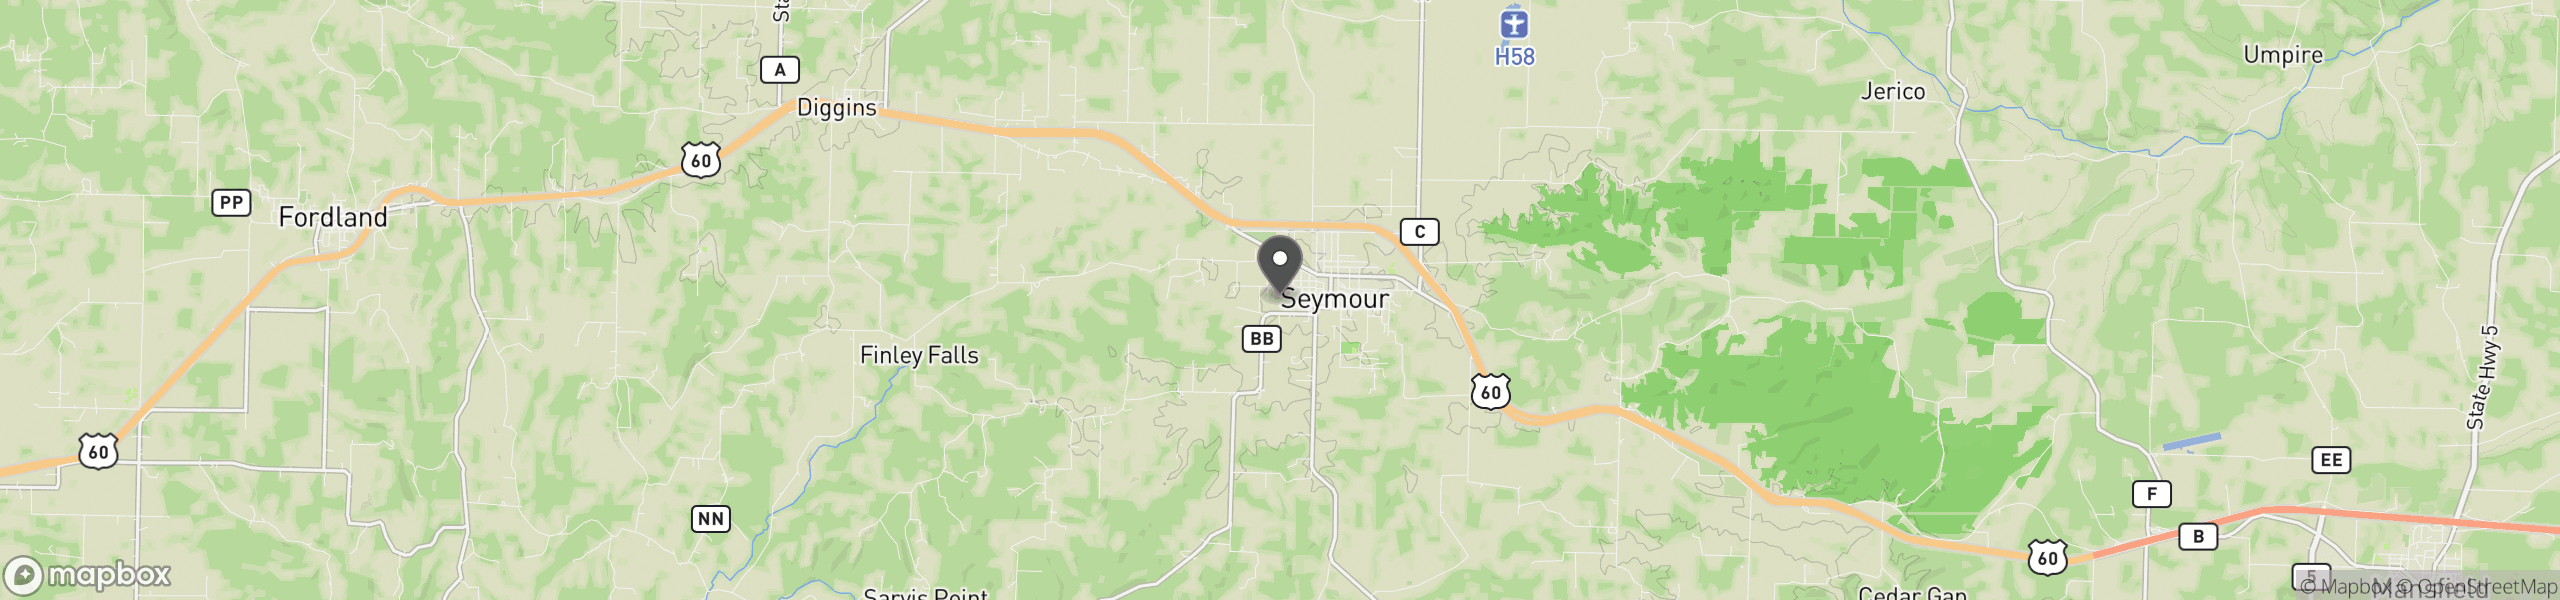 Seymour, MO